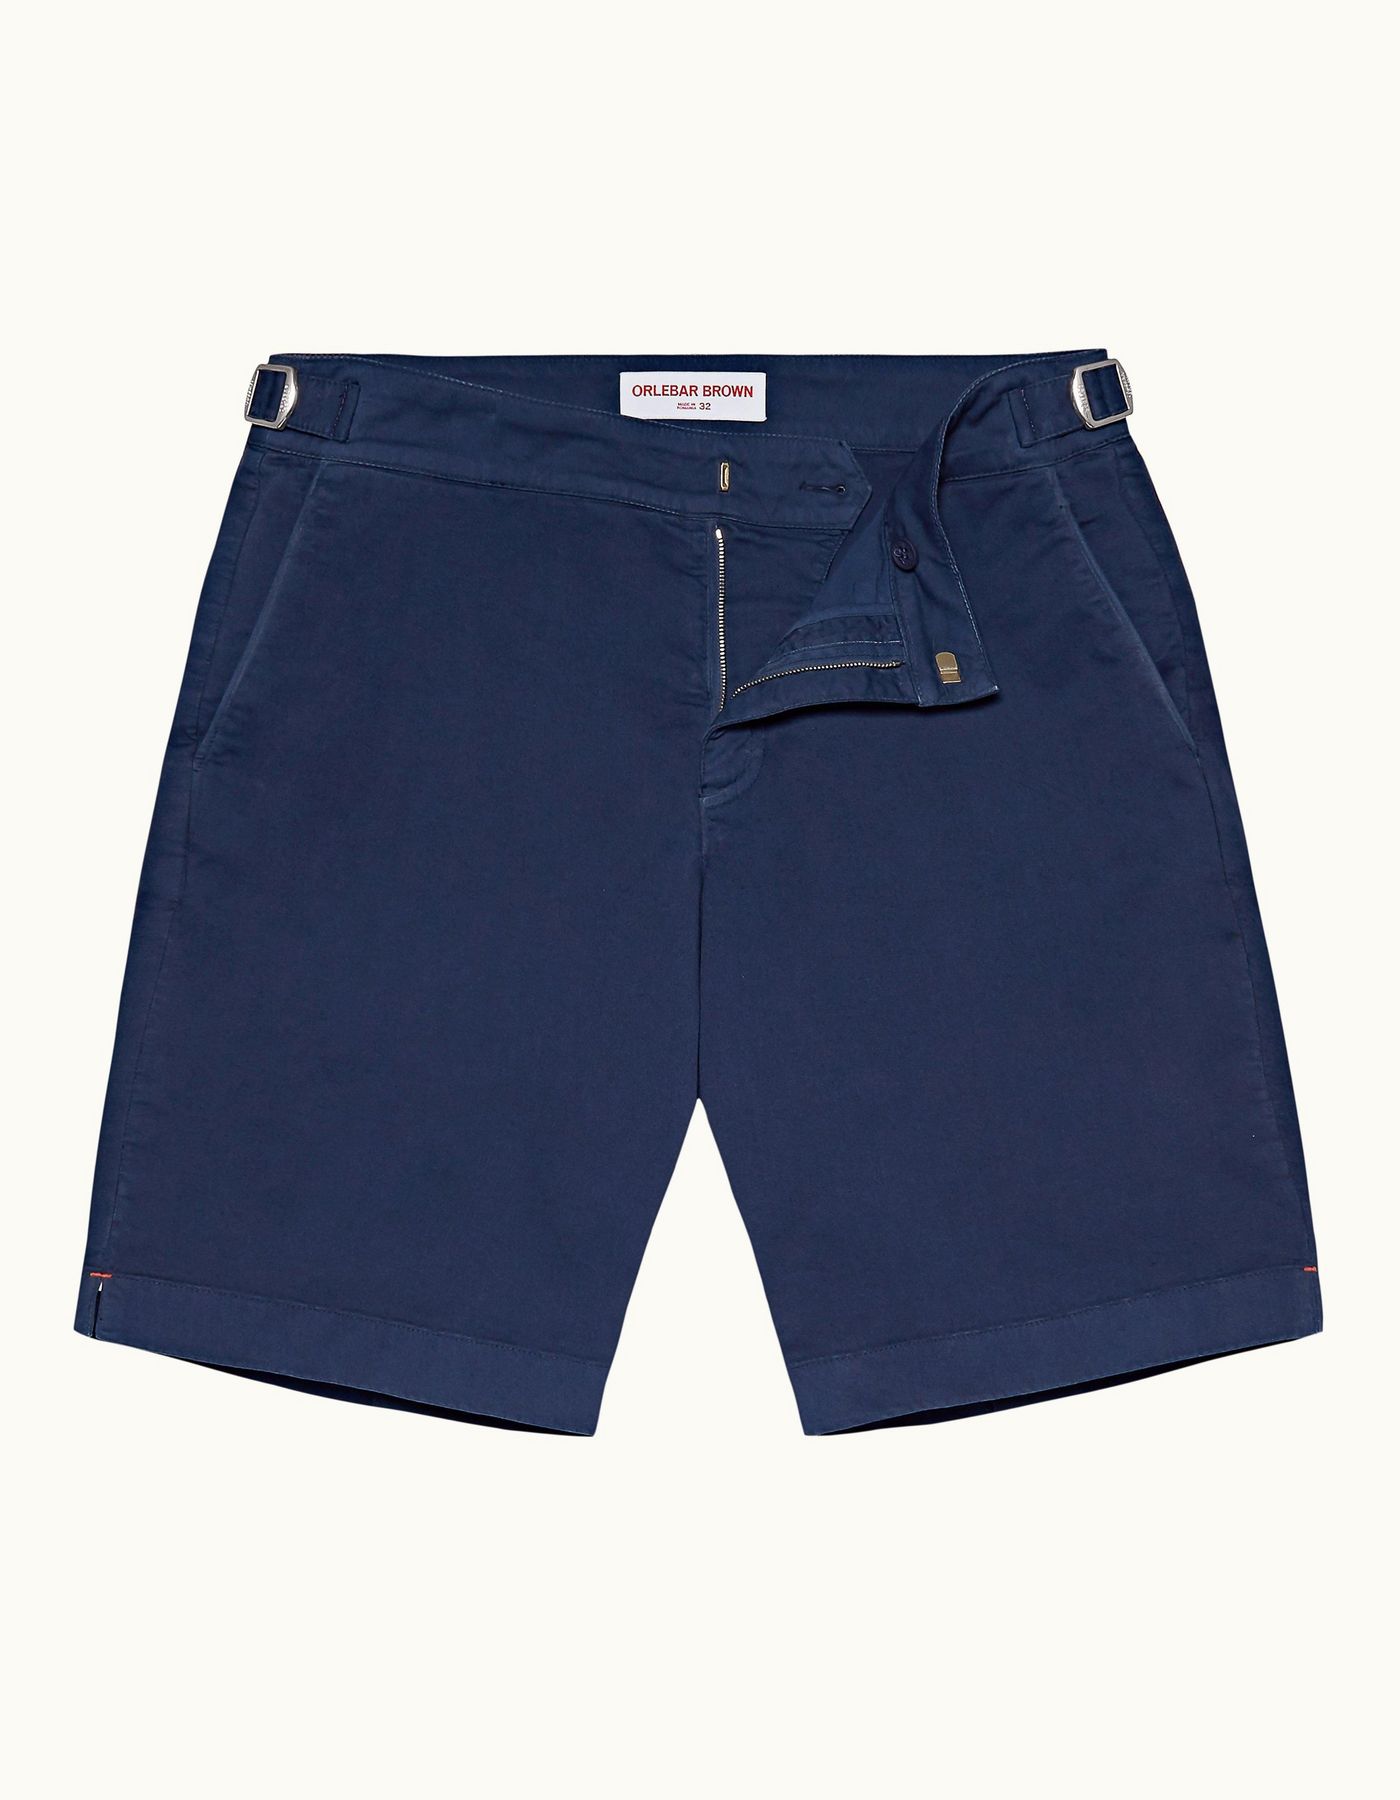 Dane Cotton Twill - Mens Blue Wash Longest-Length Cotton Twill Shorts